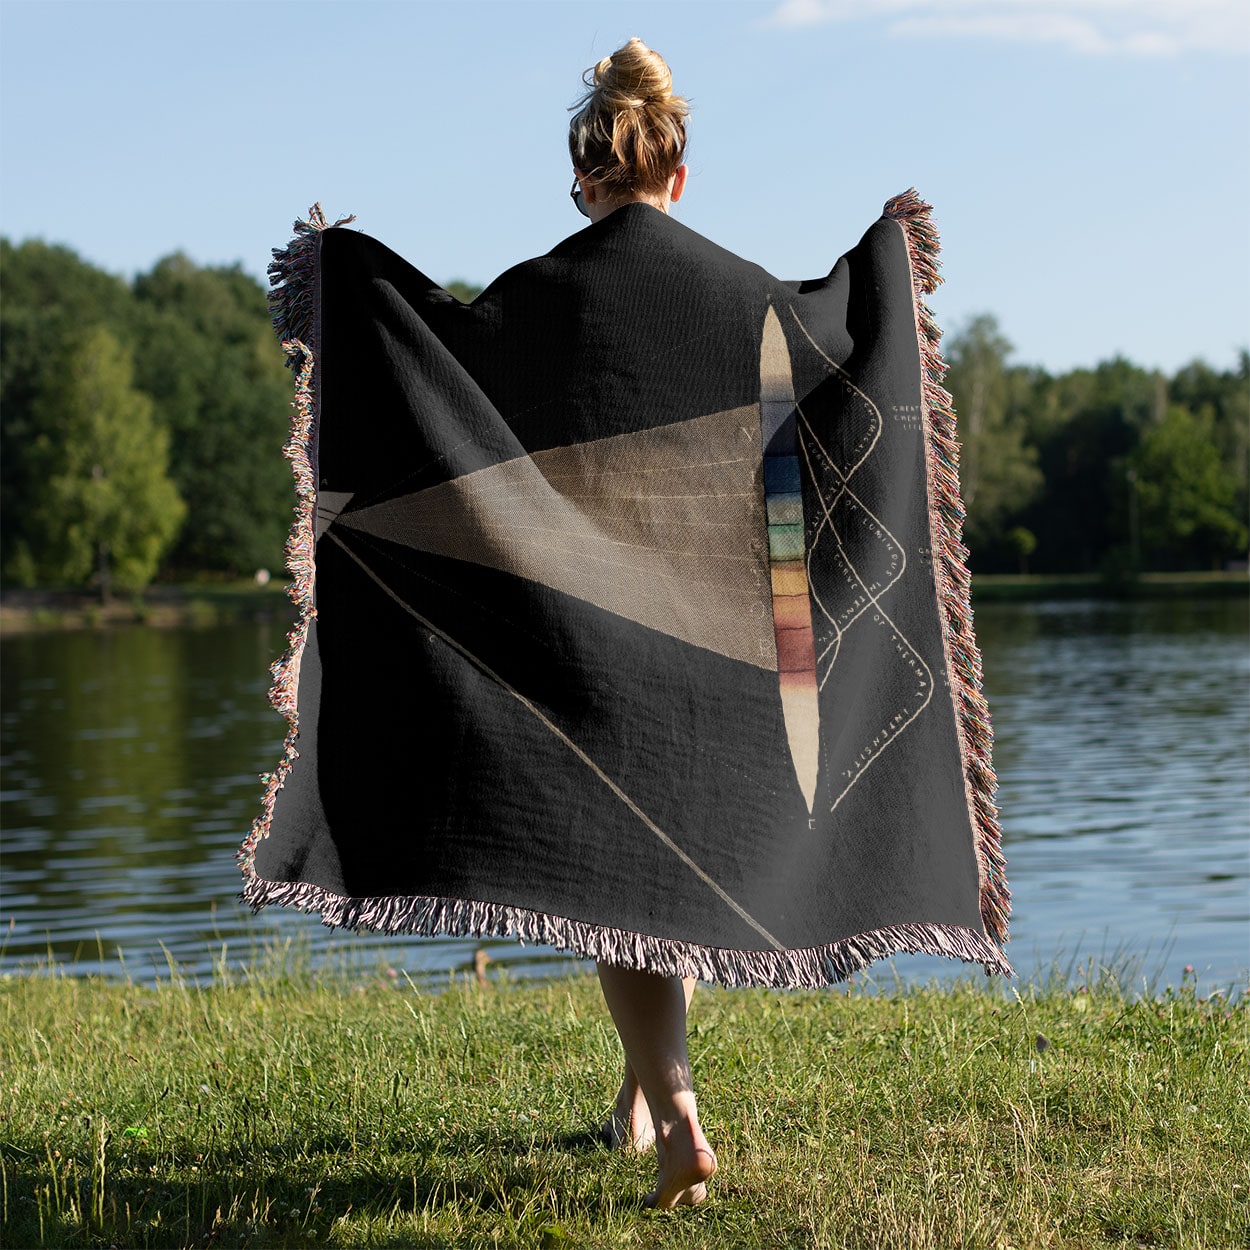 Scientific Woven Blanket Held on a Woman's Back Outside